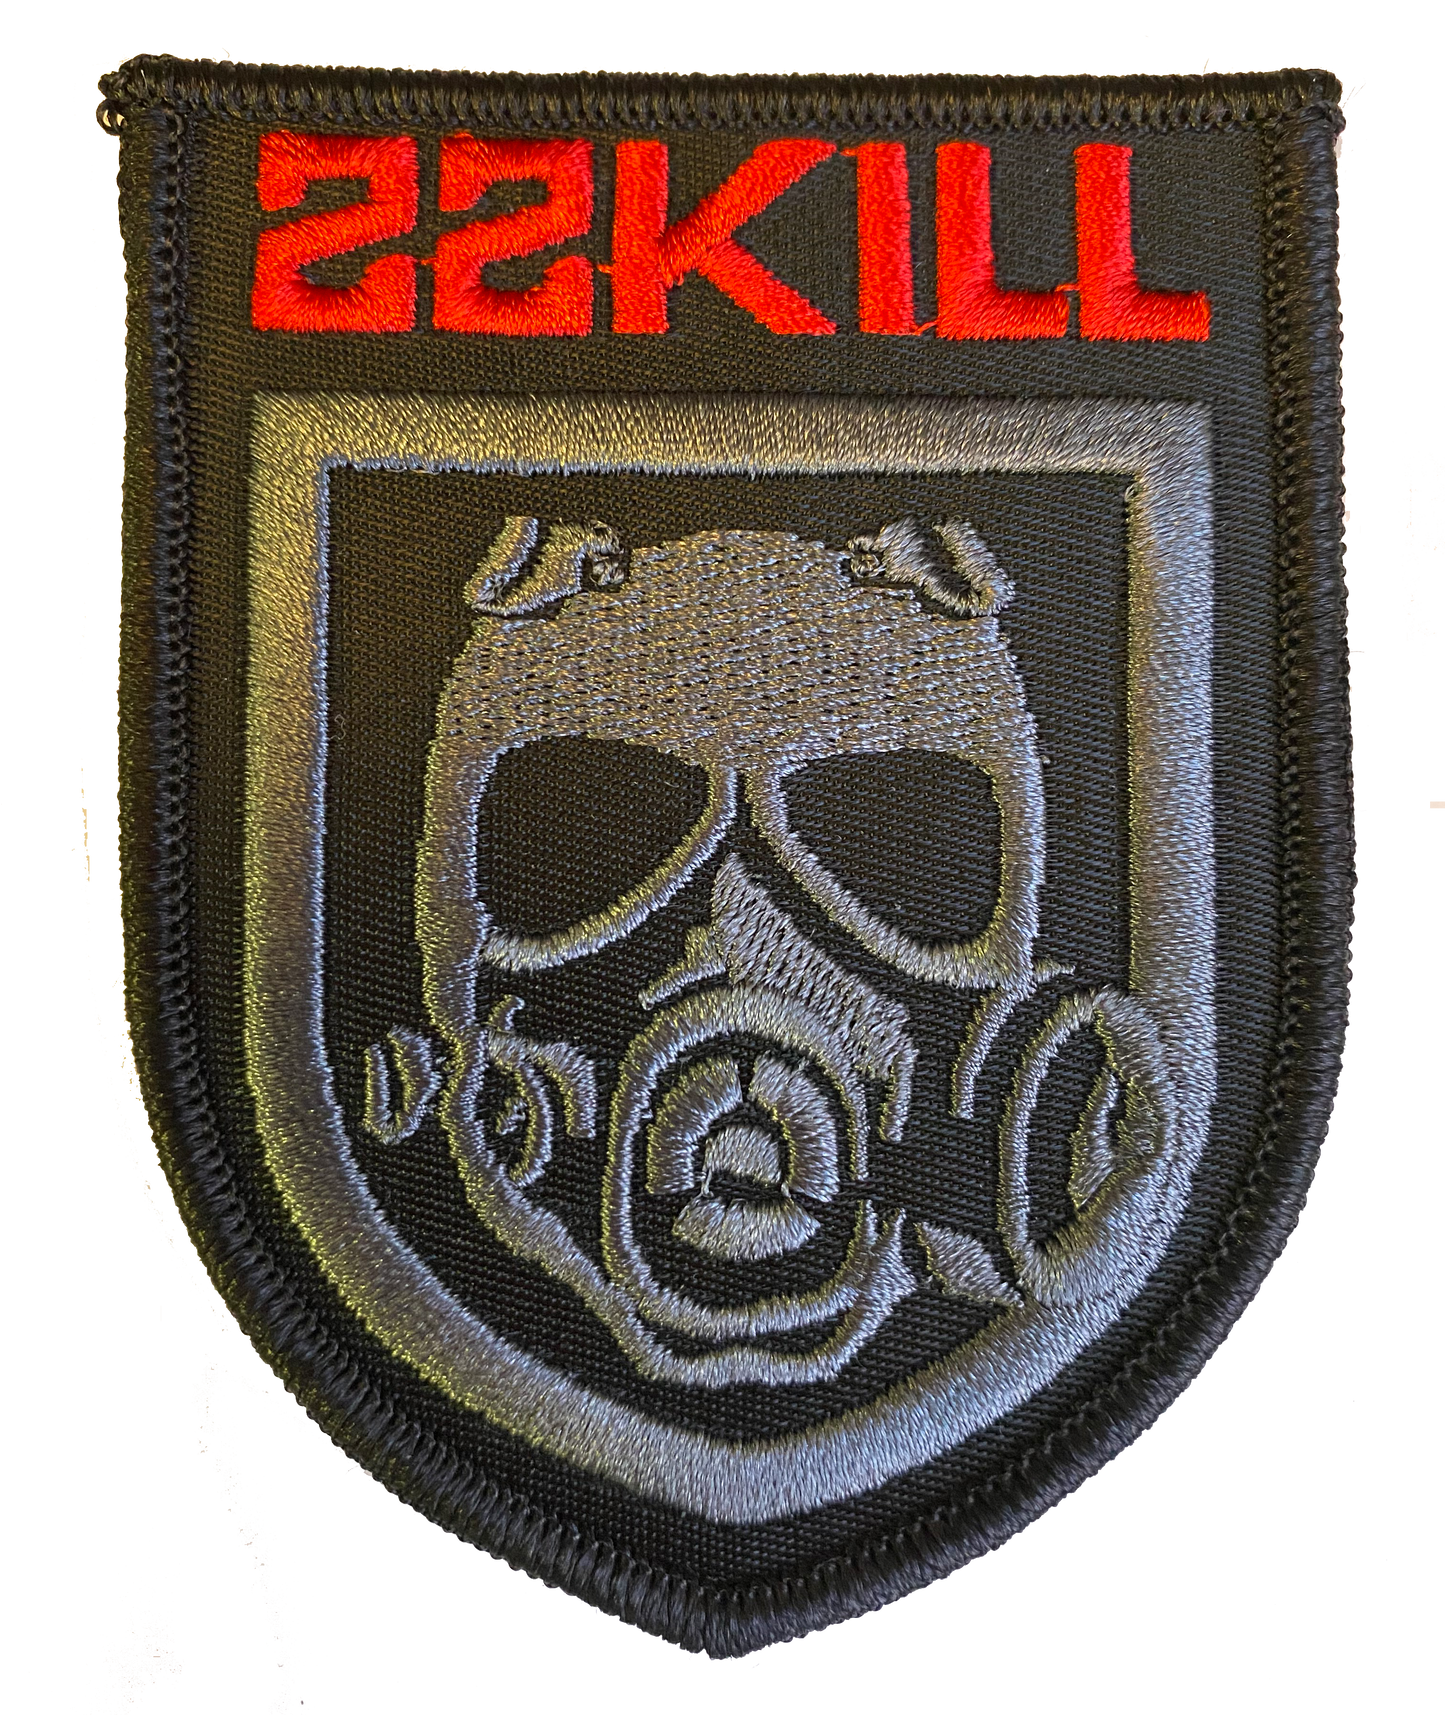 3-inch 22KILL silver gas mask shield patch